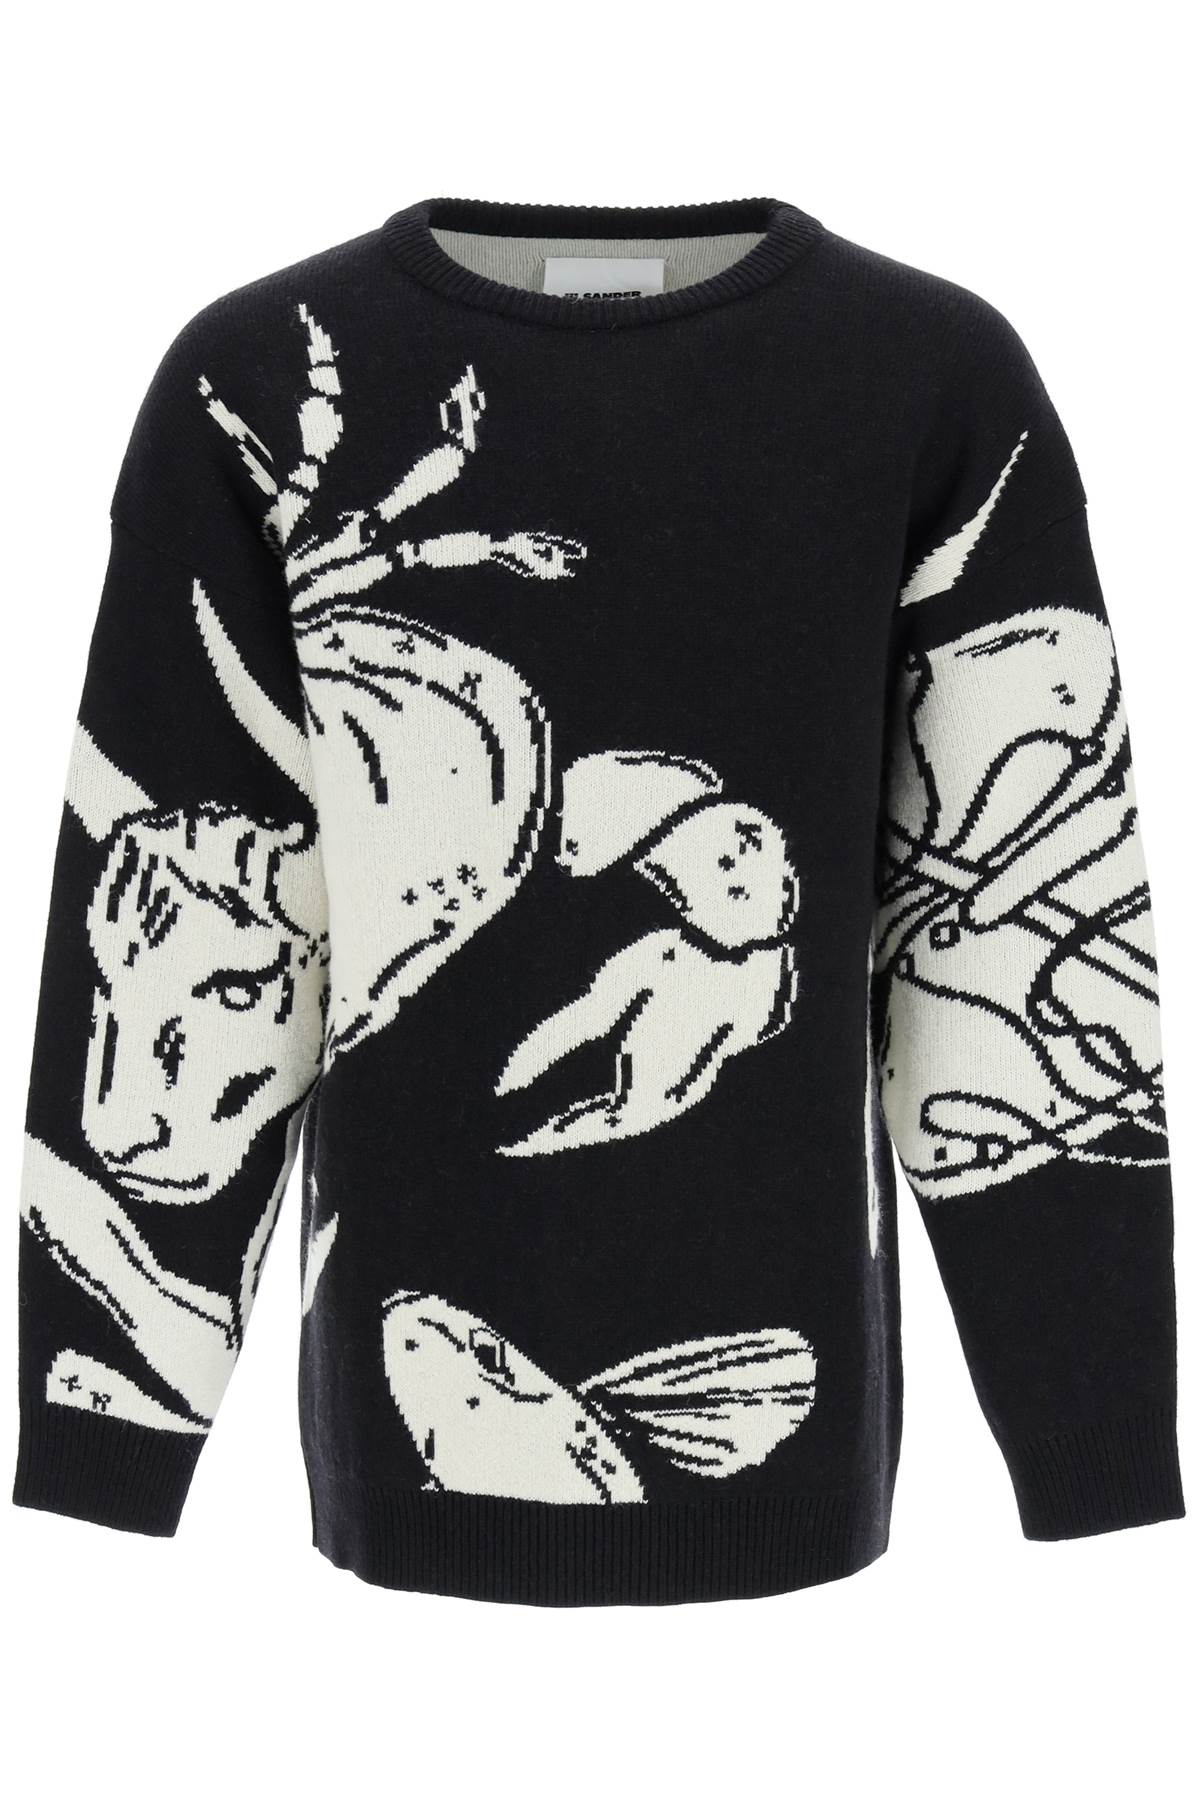 Jil Sander astrology Jacquard Oversize Sweater